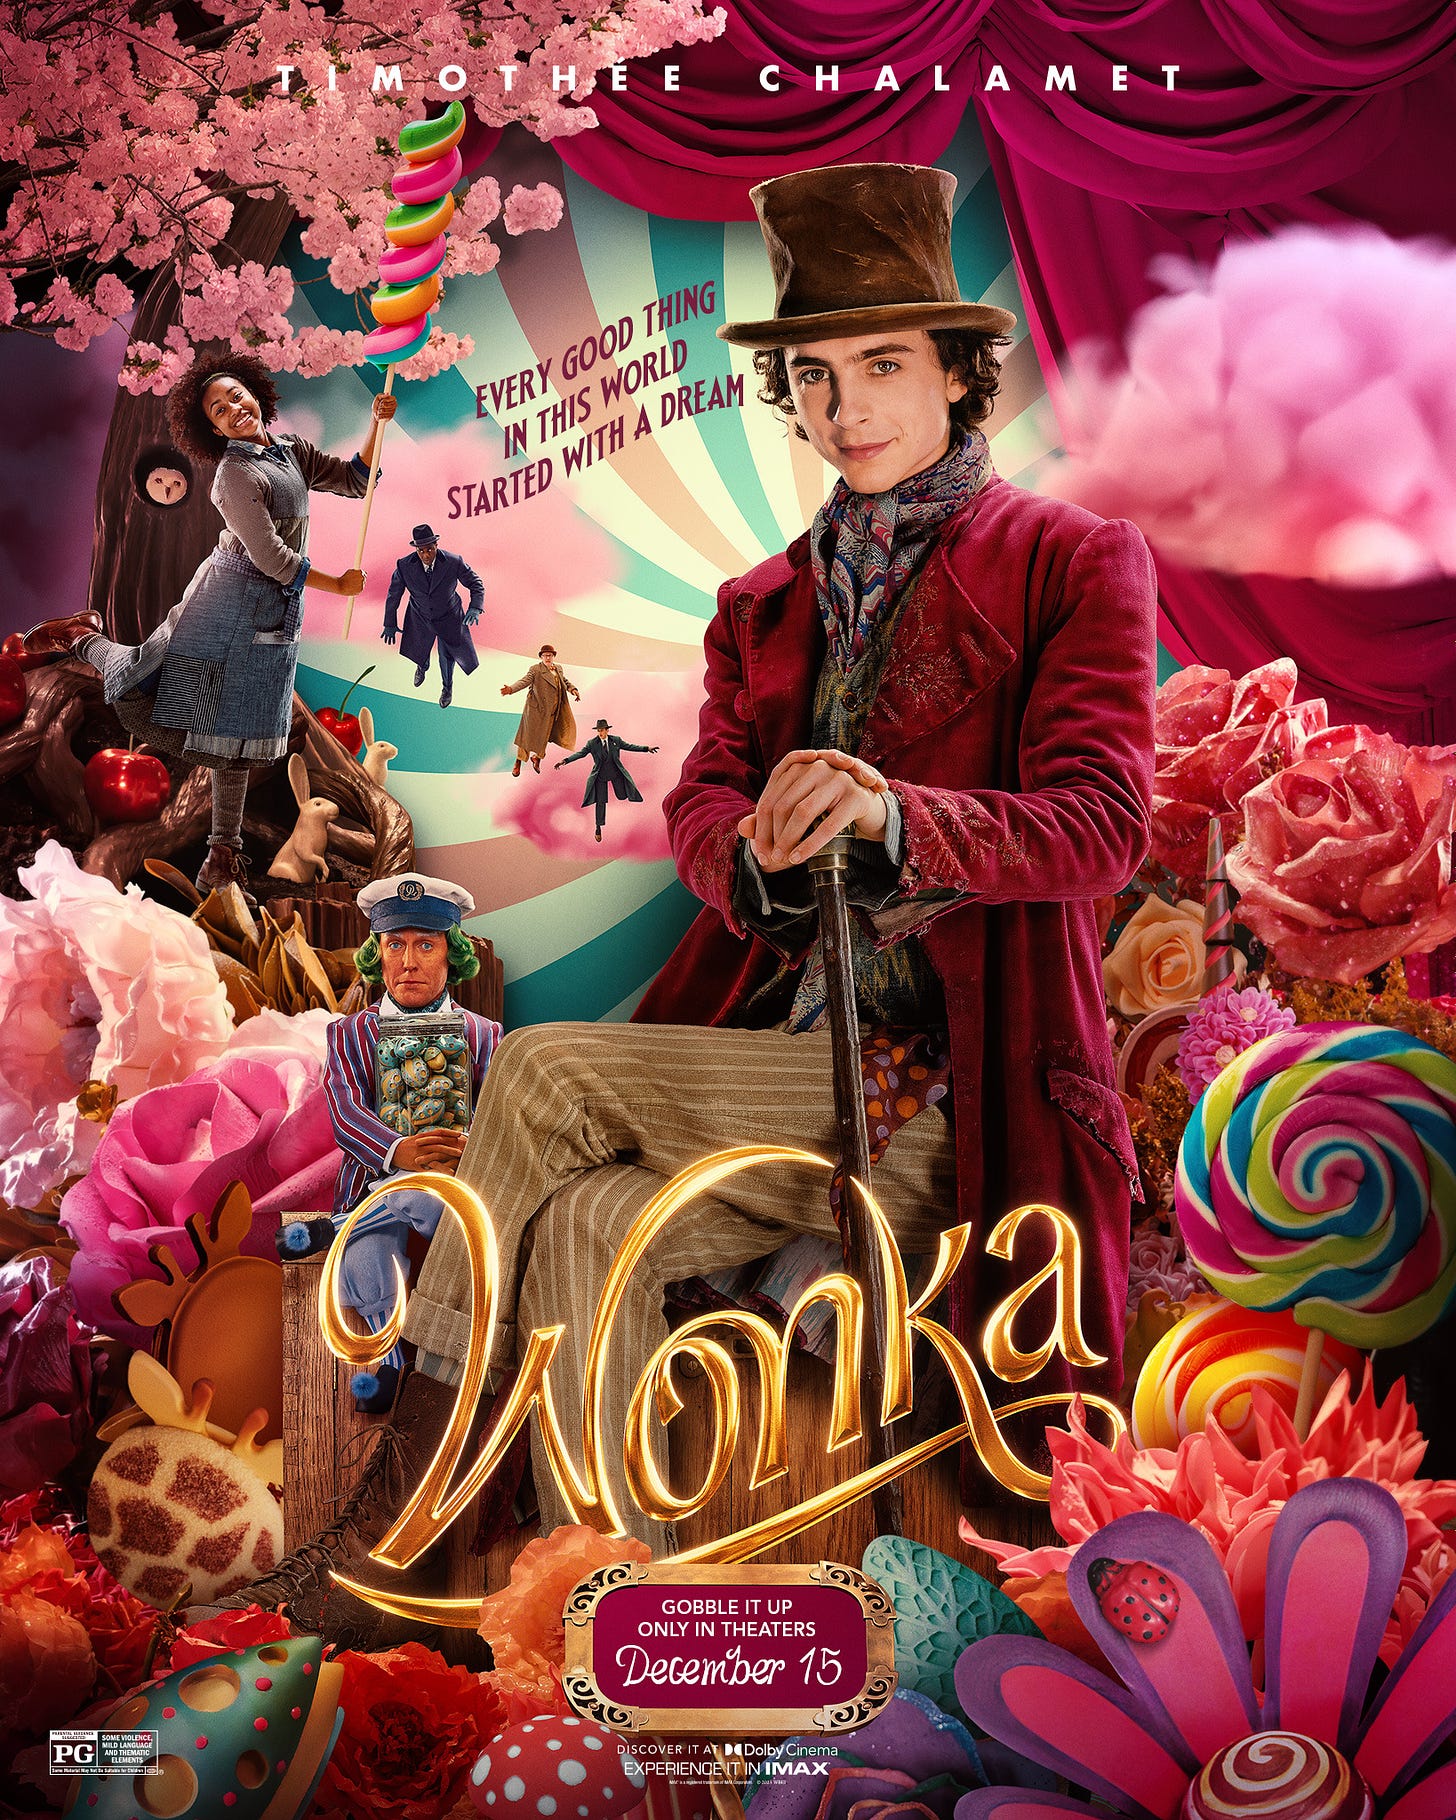 Timothée Chalamet Looks Like a Walking Chocolate Bar at the 'Wonka' Premiere